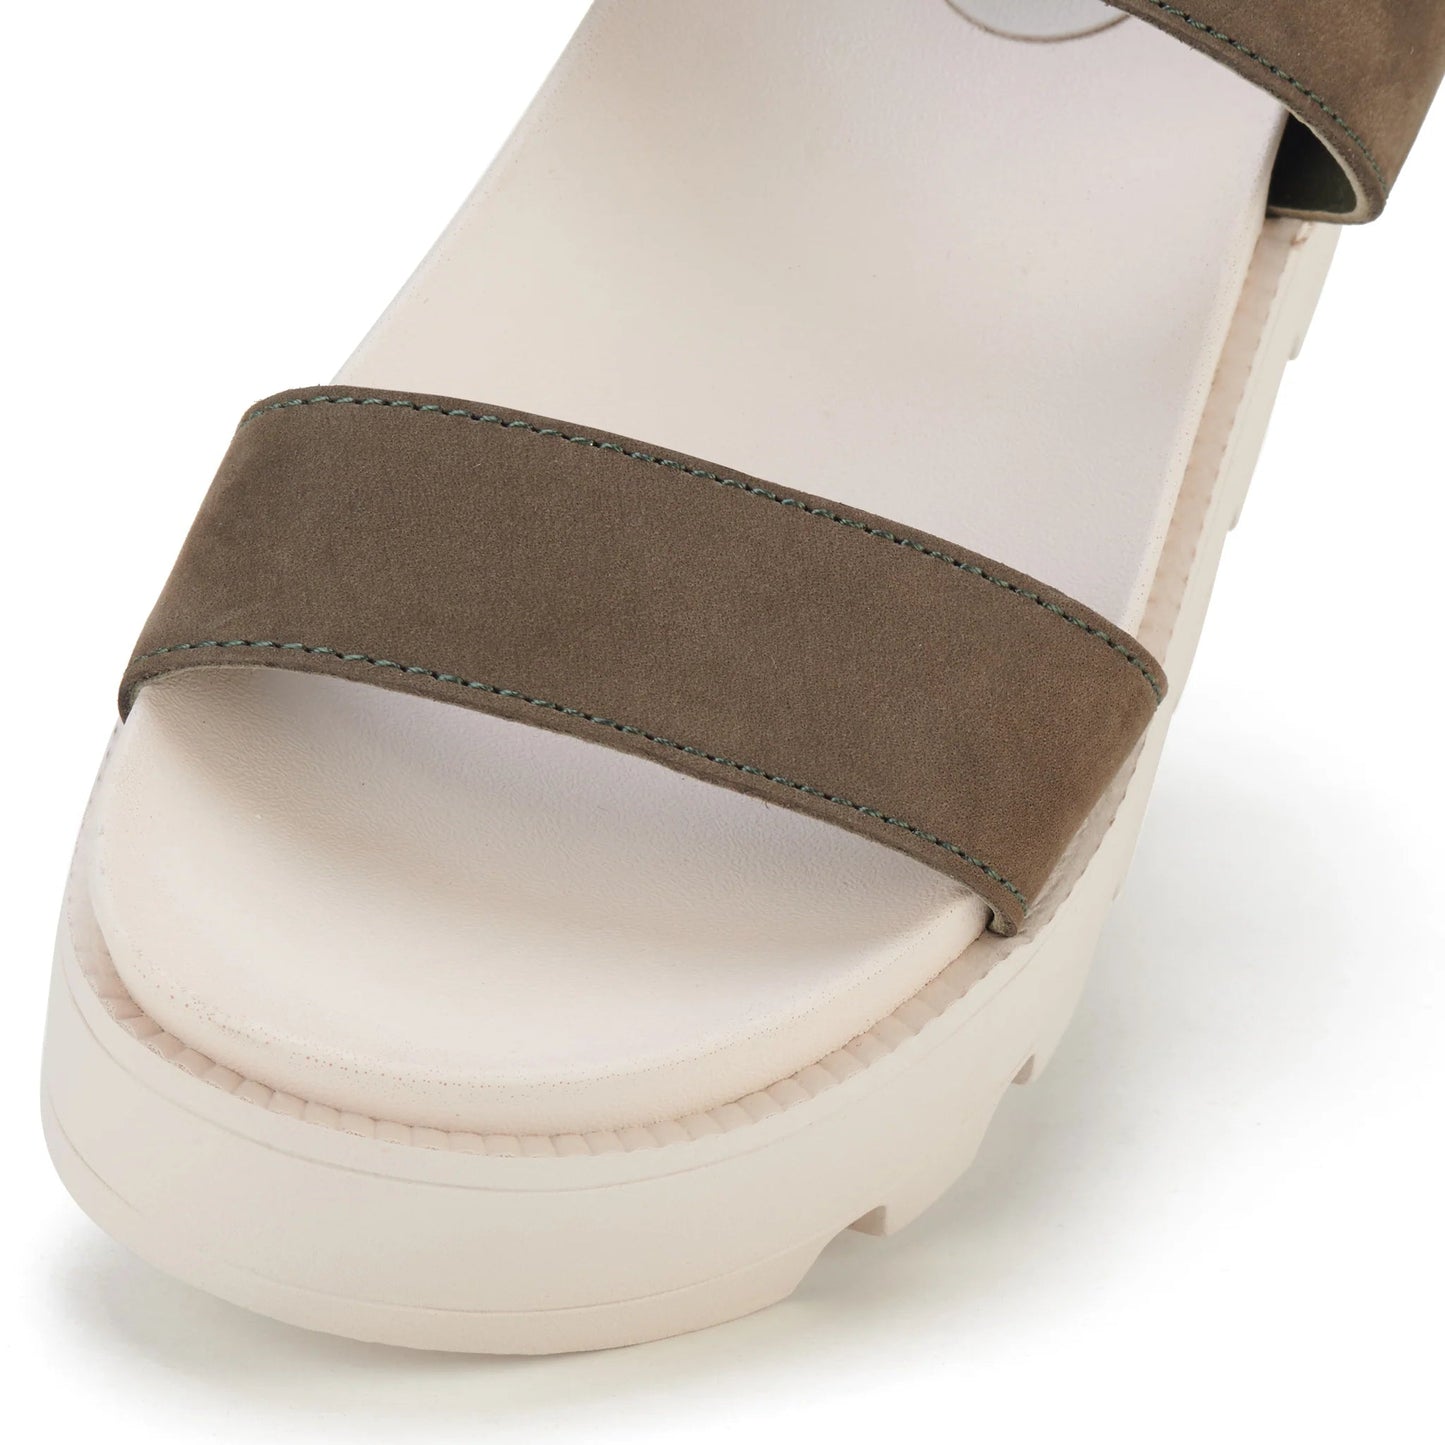 Zeze Wedge Strap Sandal in Khaki